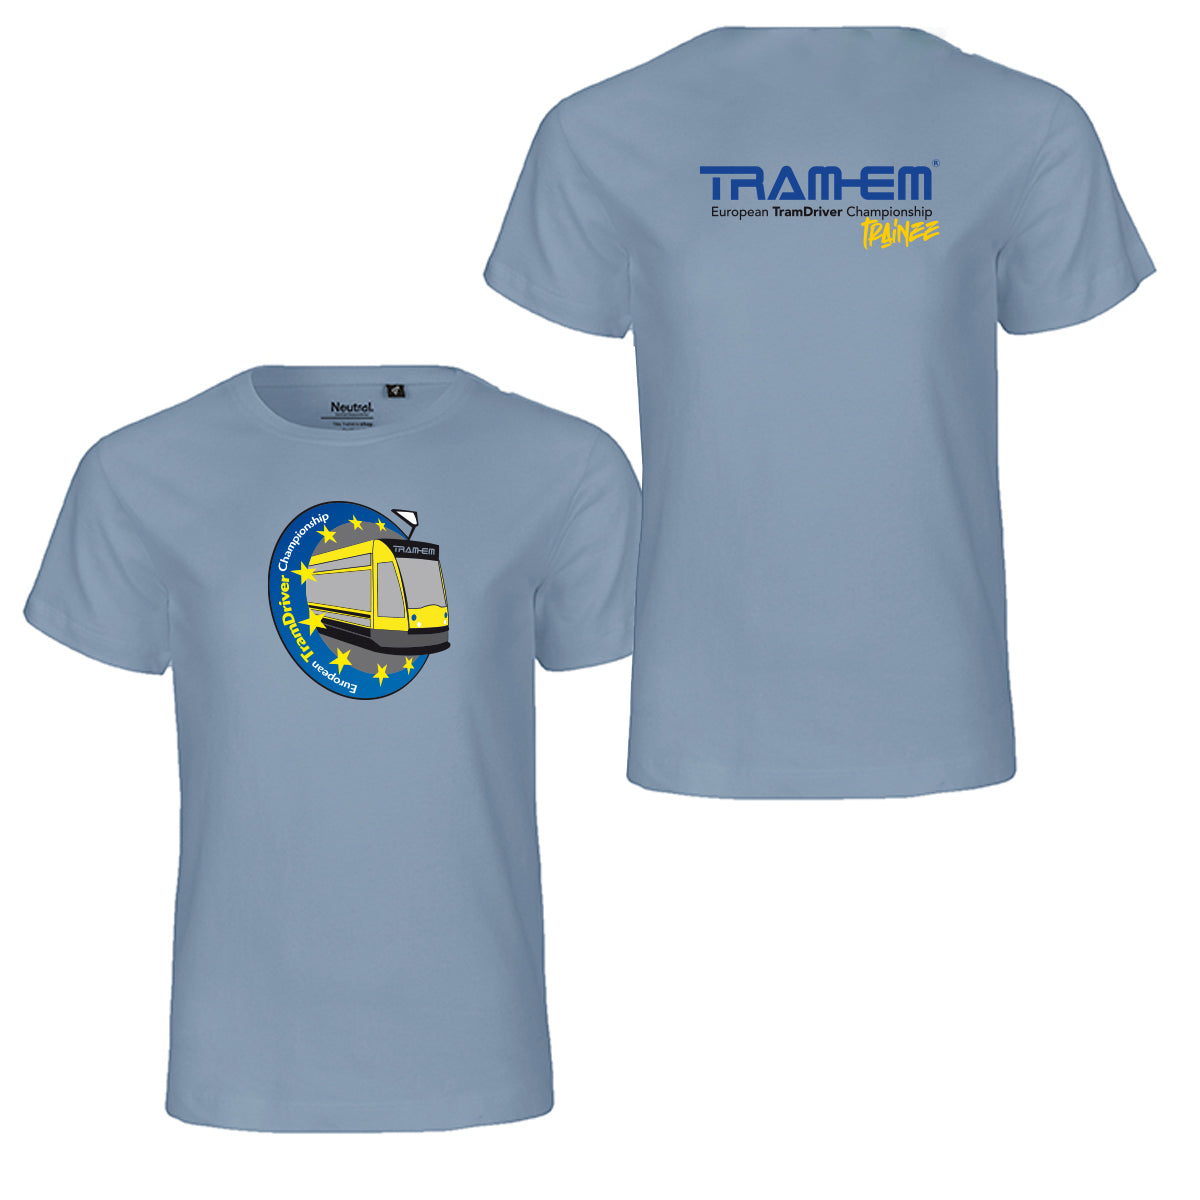 Tram-EM Trainee | Kids BIO-Shirt